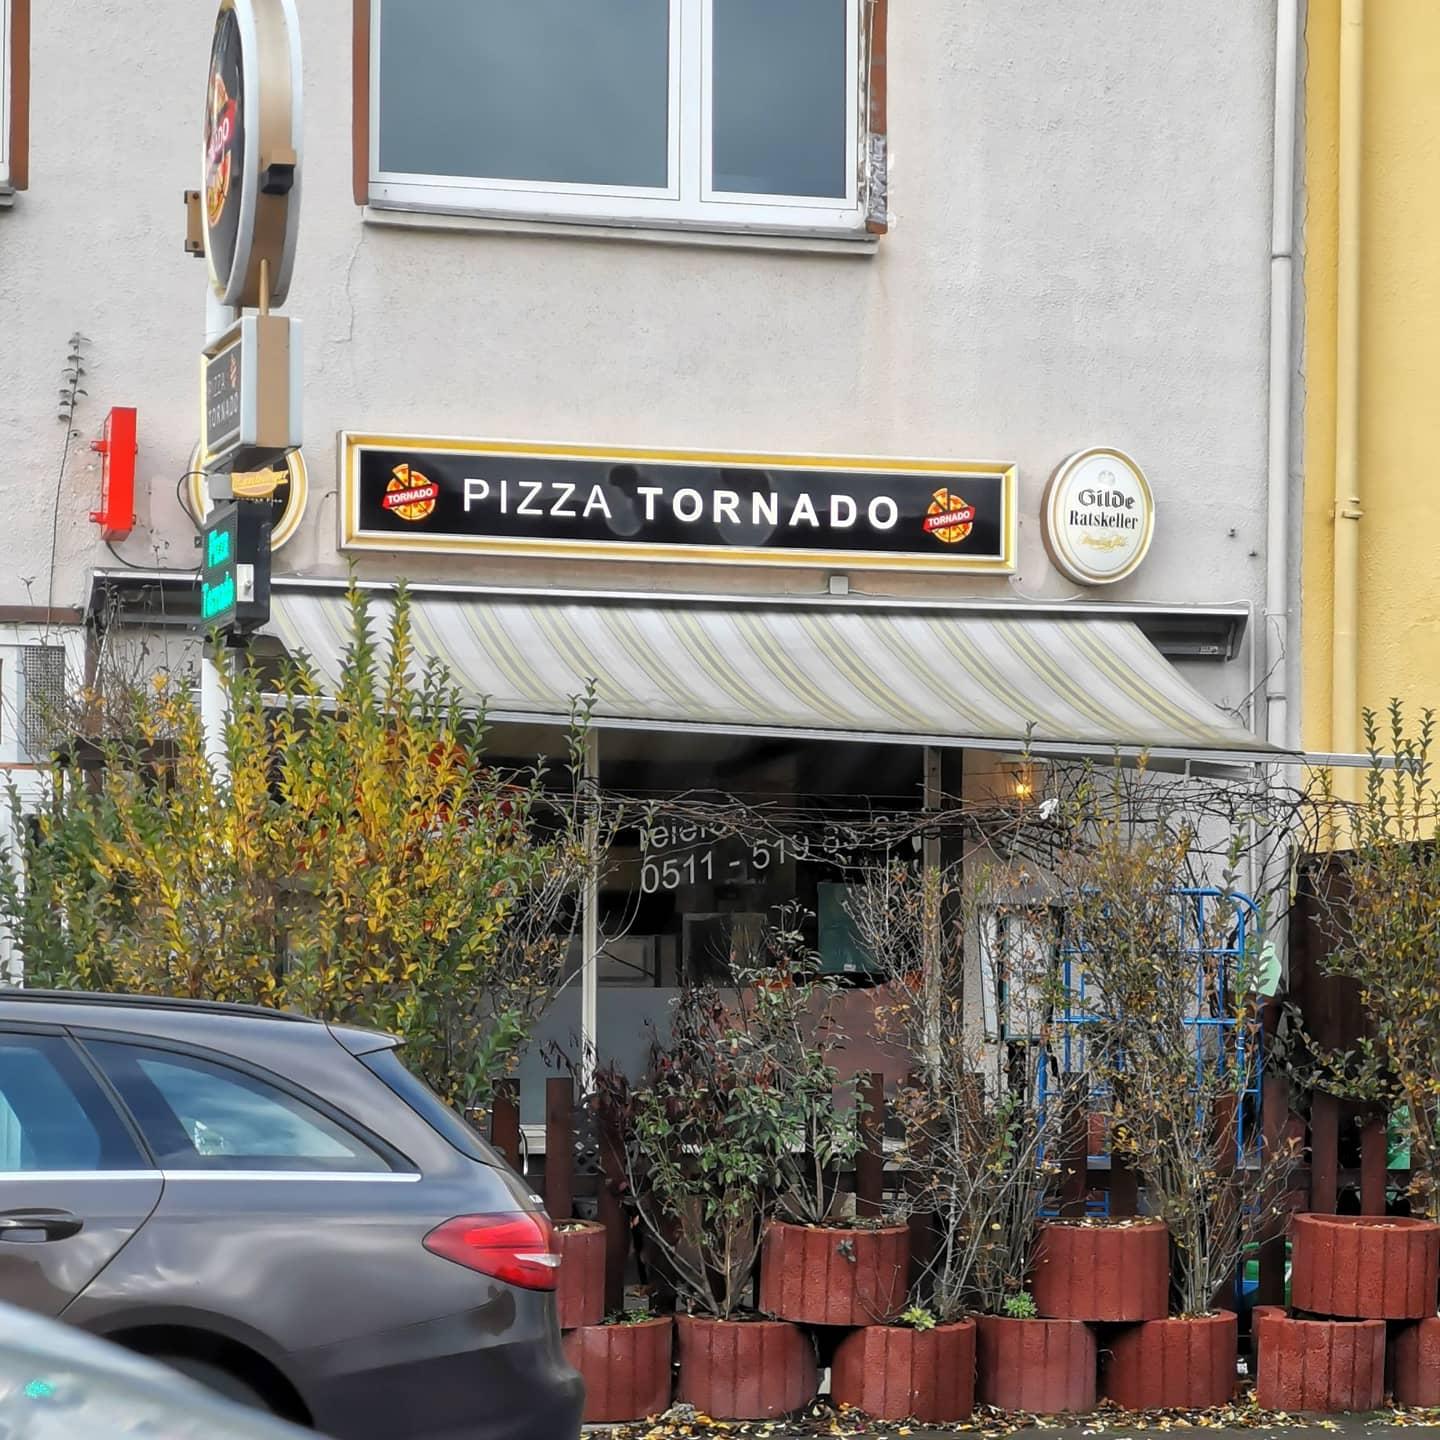 Restaurant "Pizza Tornado Misburg" in Hannover